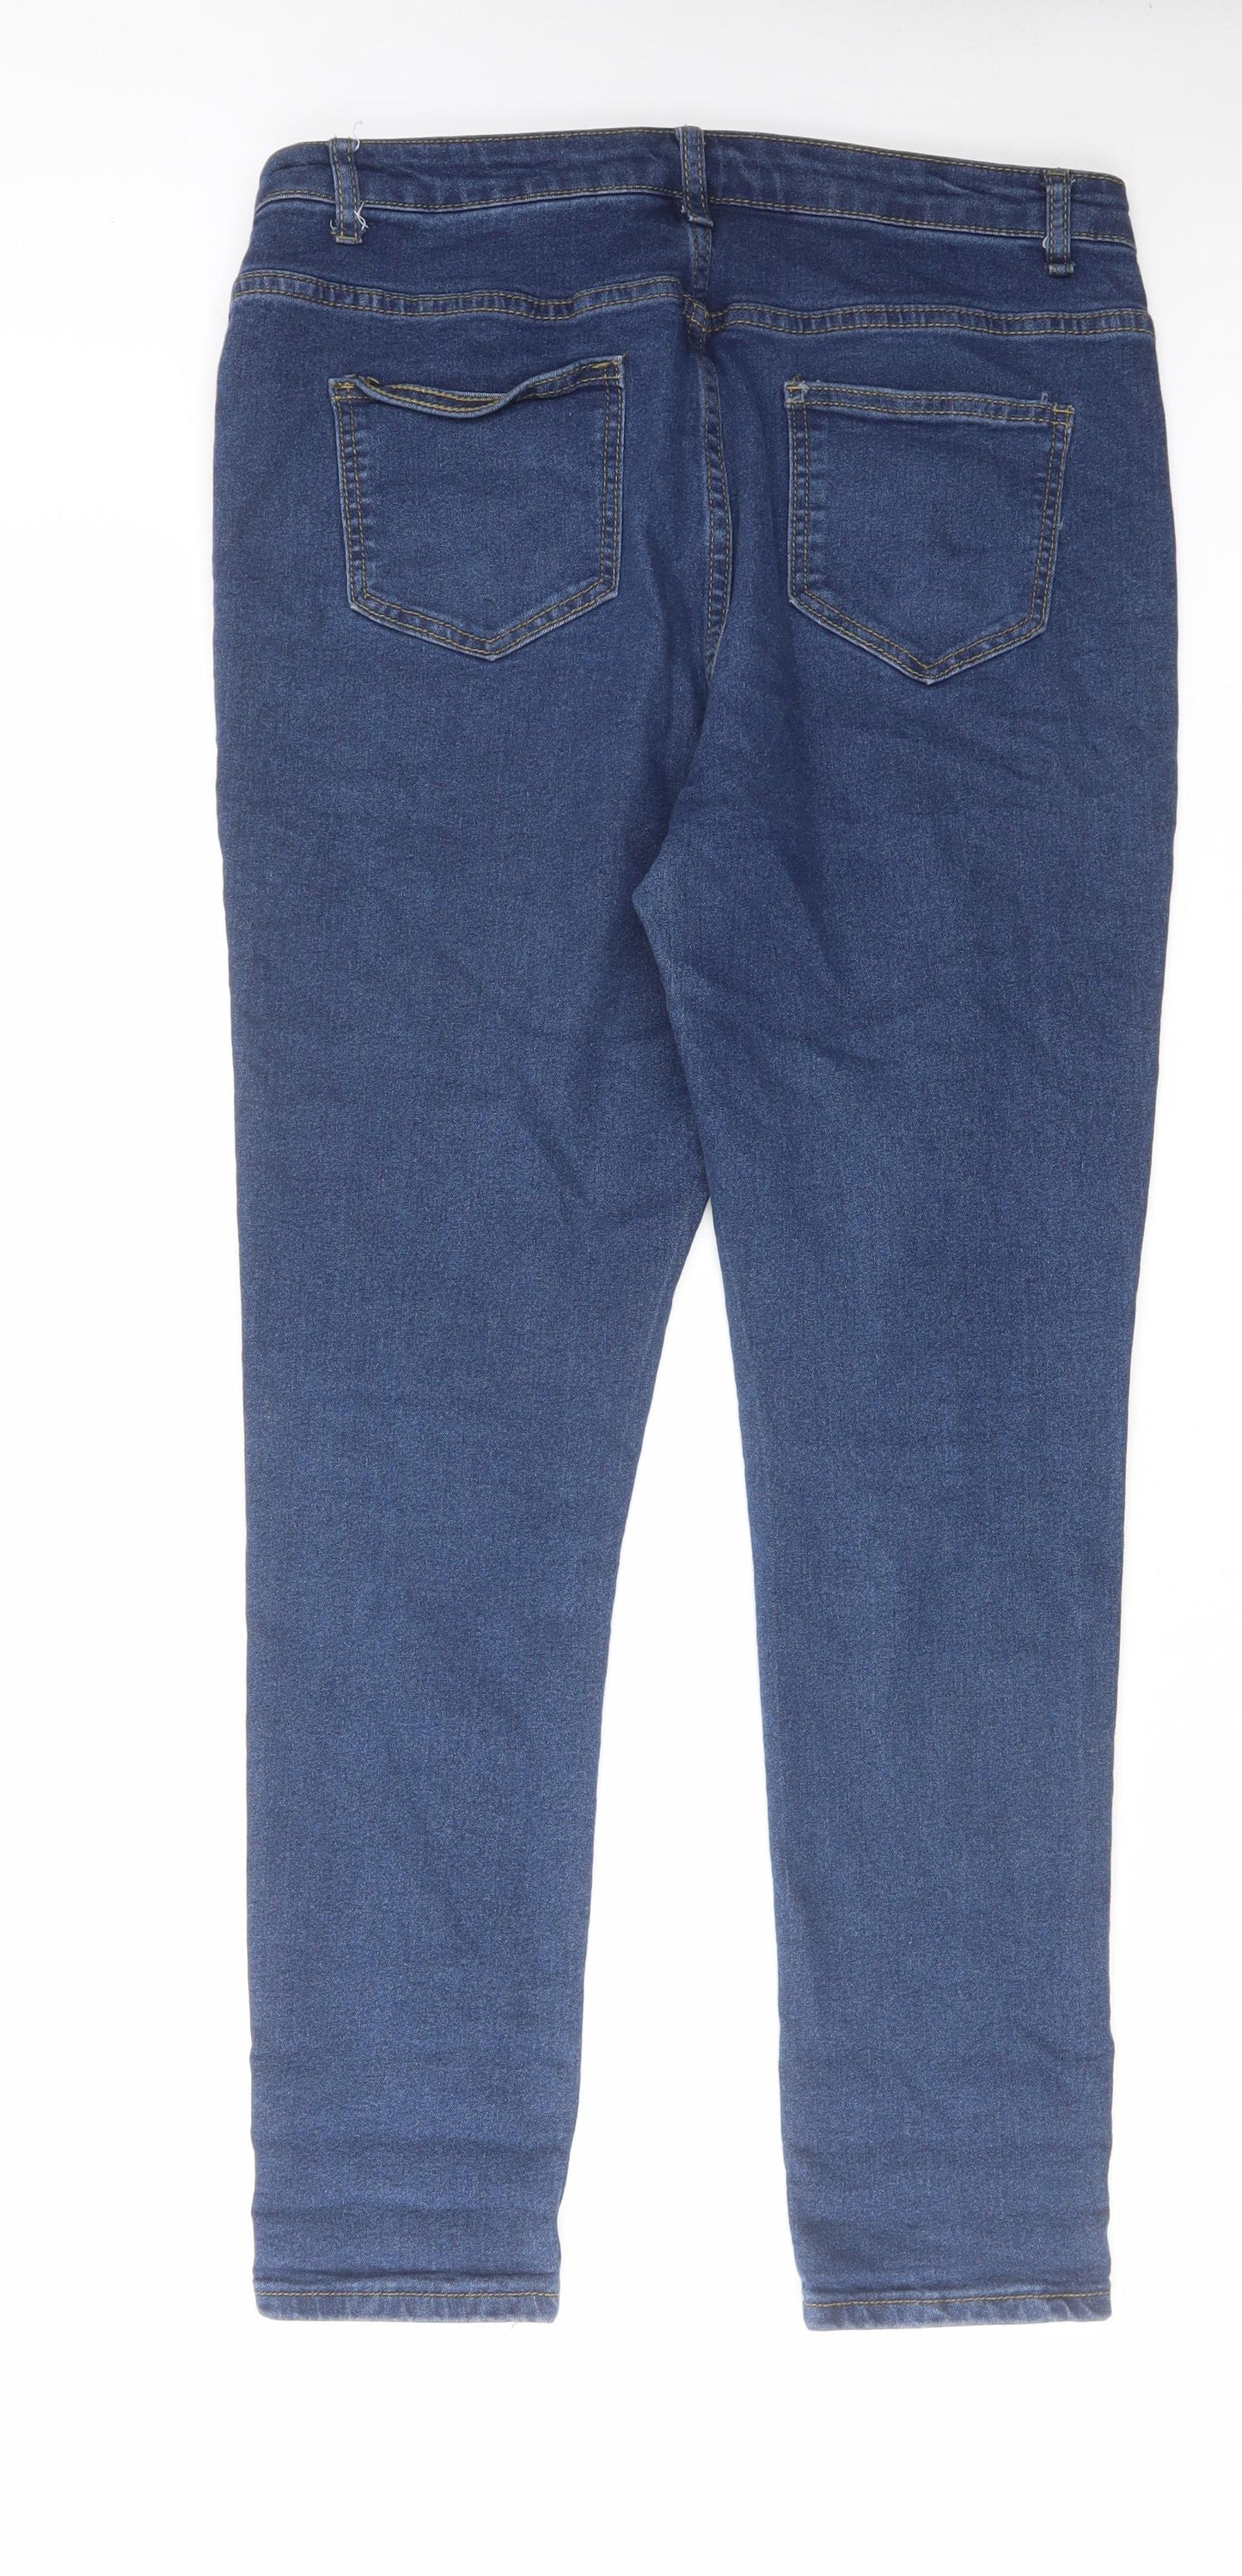 Boohoo Womens Blue Cotton Skinny Jeans Size 14 L28 in Regular Zip